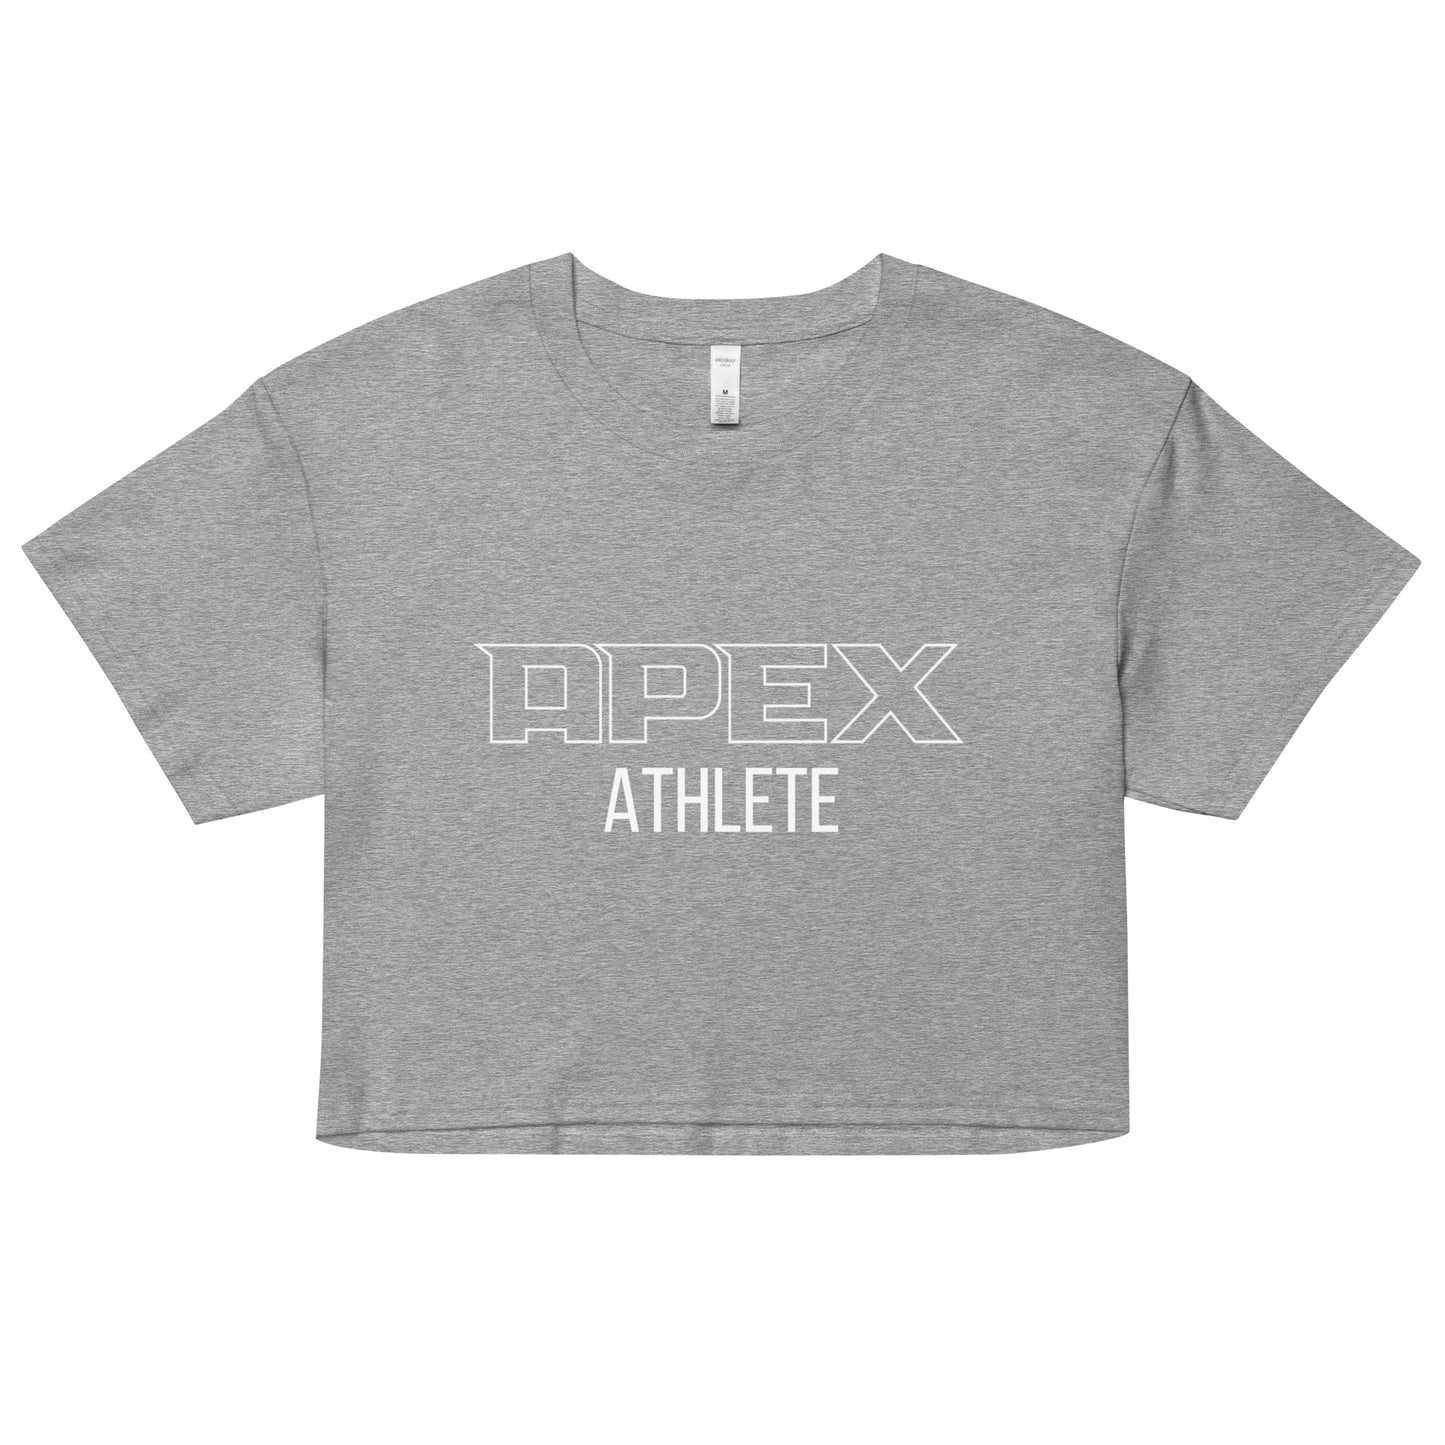 APEX Athlete crop top